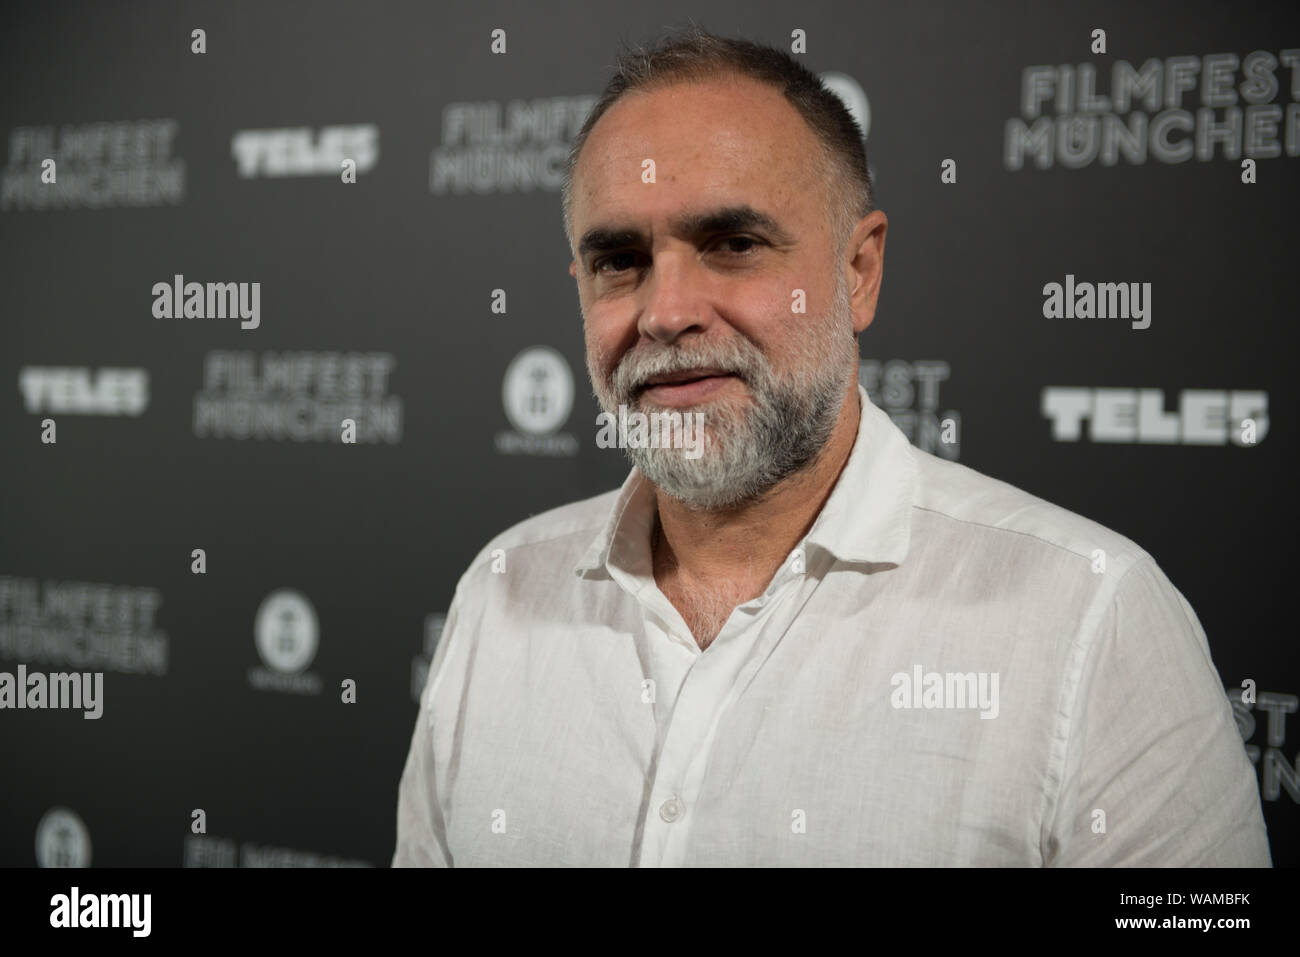 Director Karim Aïnouz seen at Filmfest München 2019 before the screening of his film A Vida Stock Photo